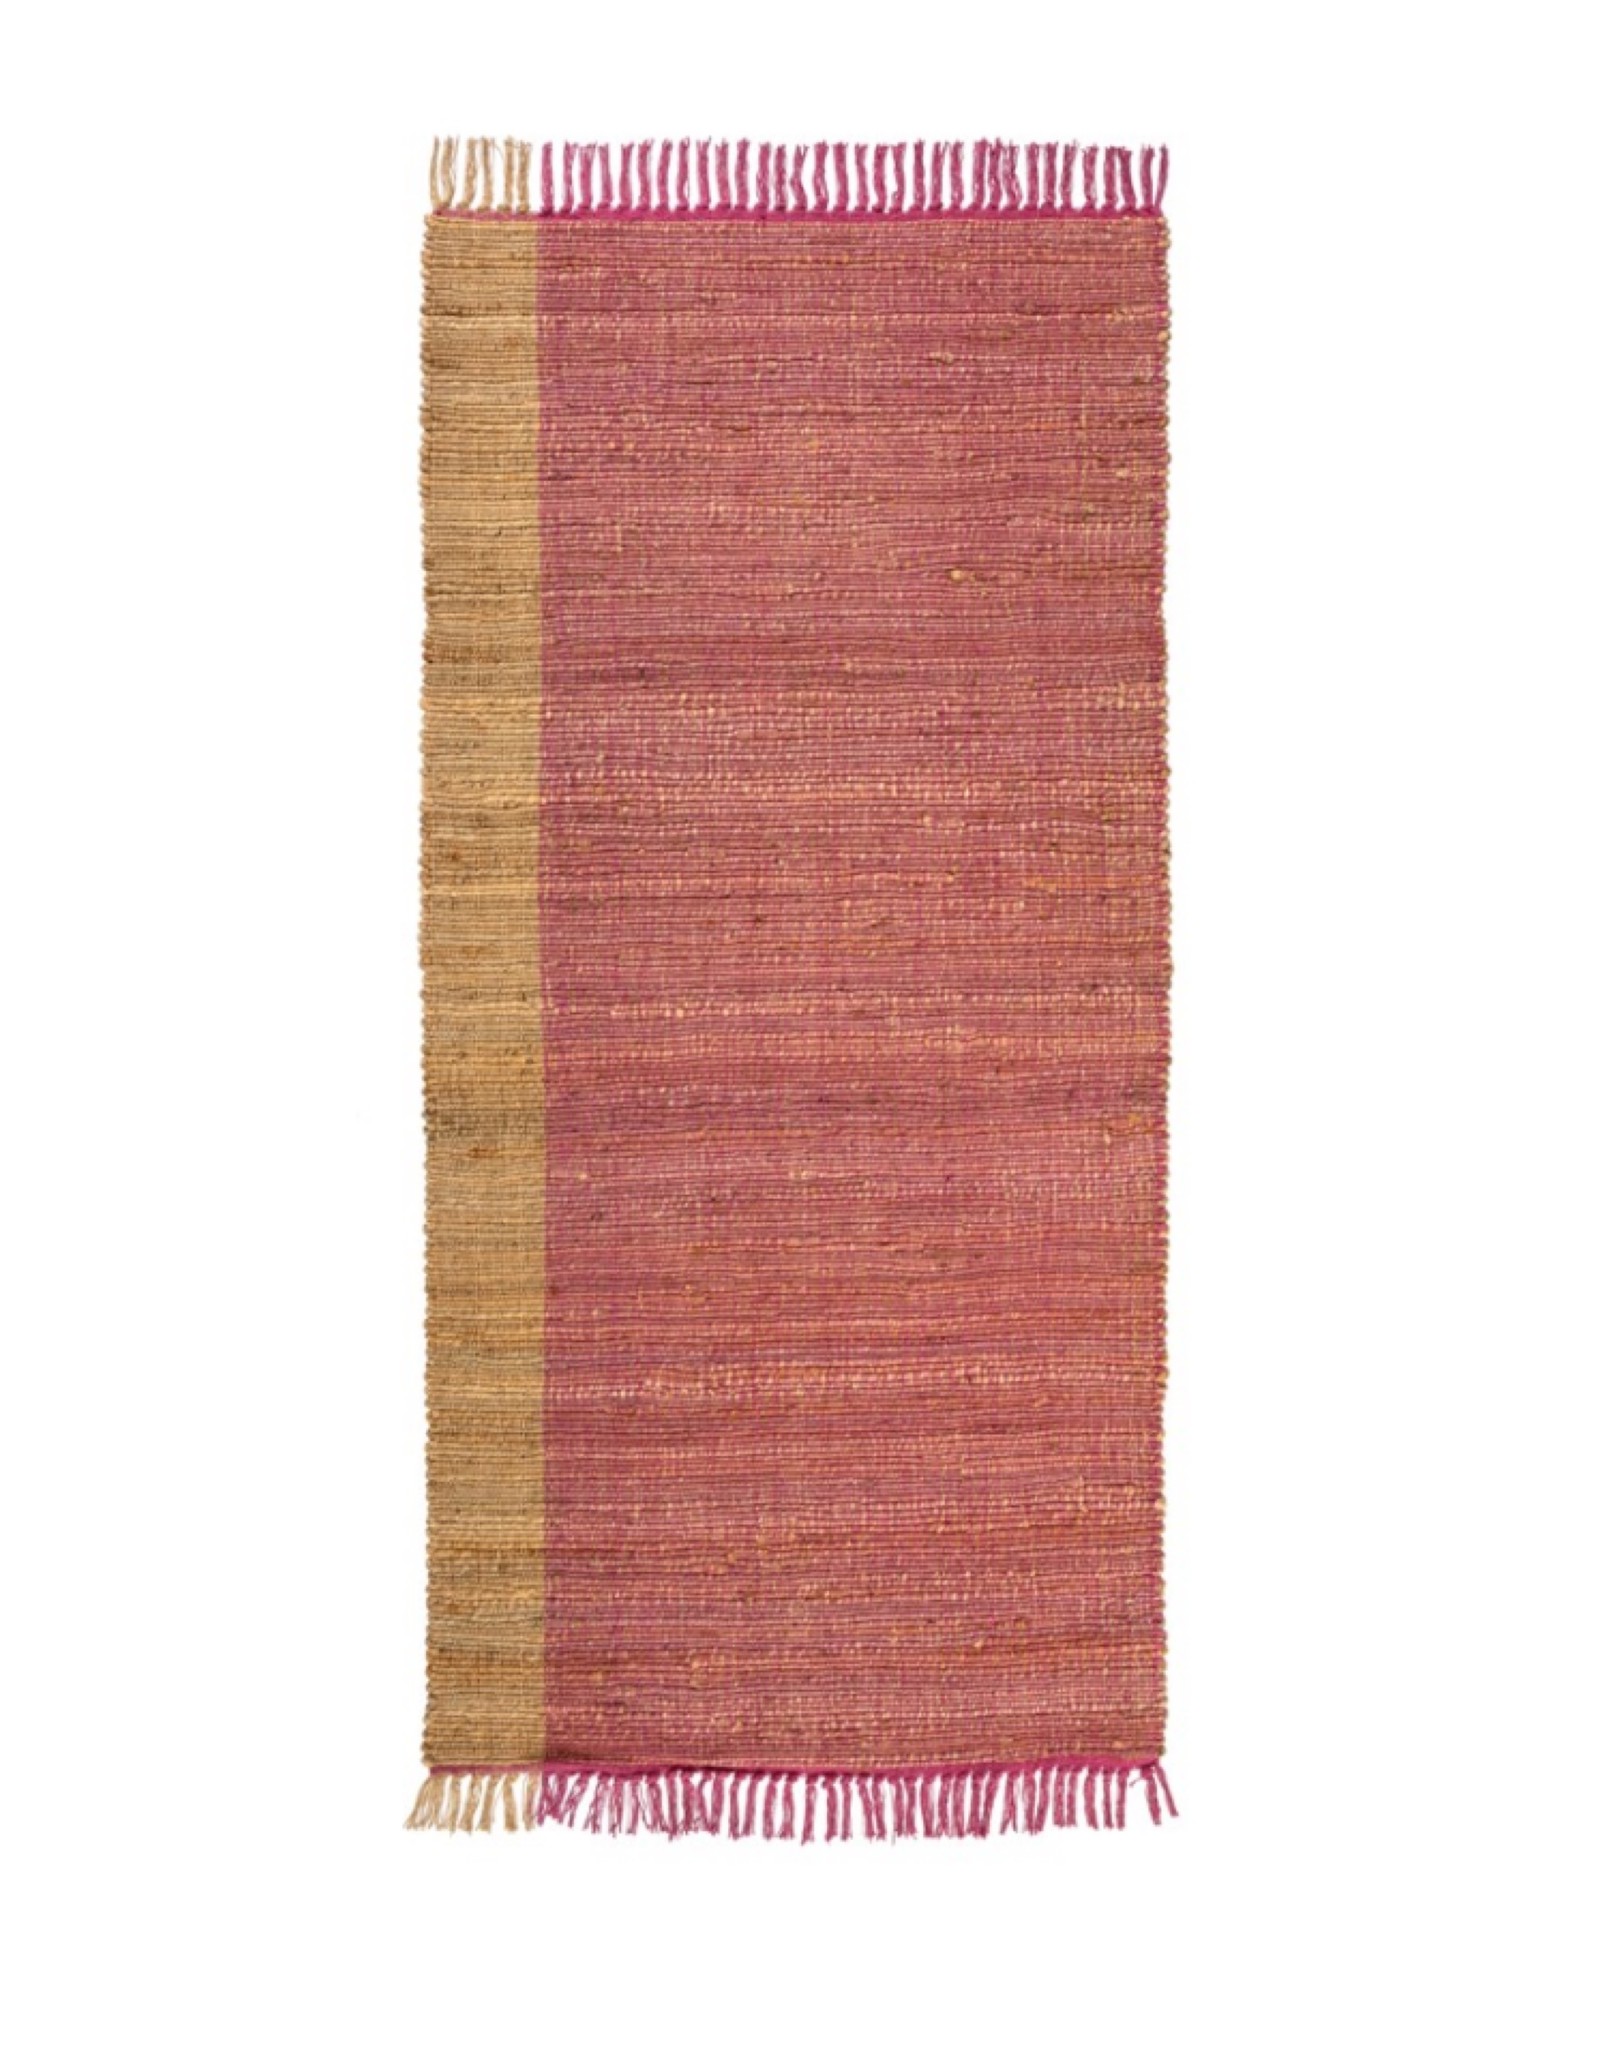 Indaba Rugs Indaba Stripe Jute Pink 2’ x 5’ 1-4891